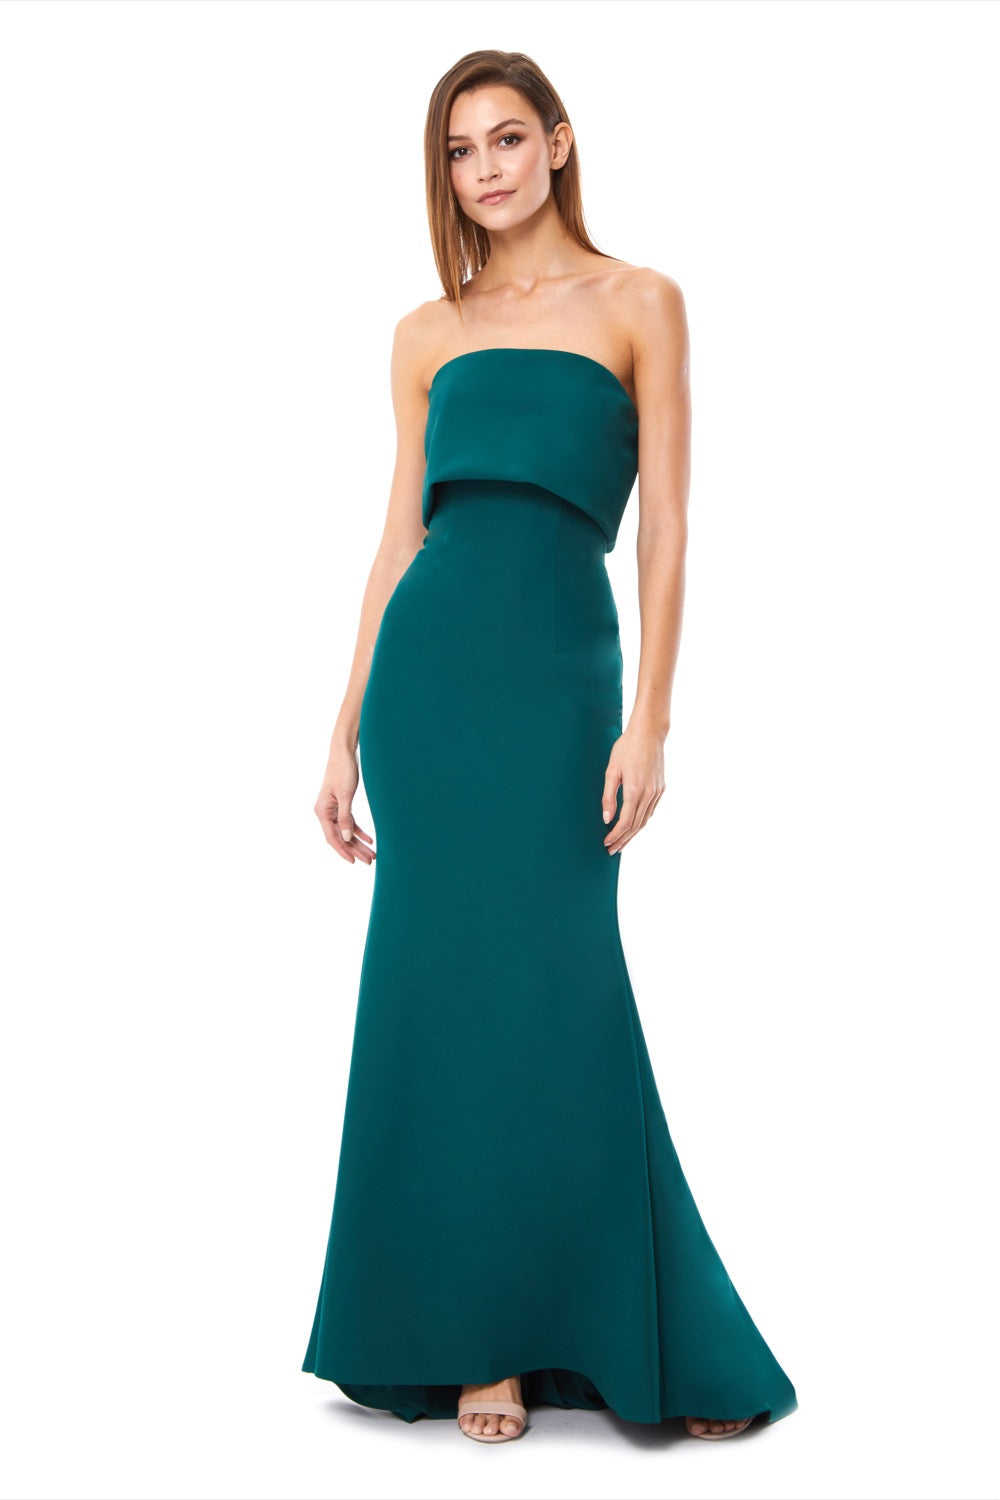 Blaze Strapless Maxi Dress With Overlay, UK 10 / US 6 / EU 38 / Dark Green